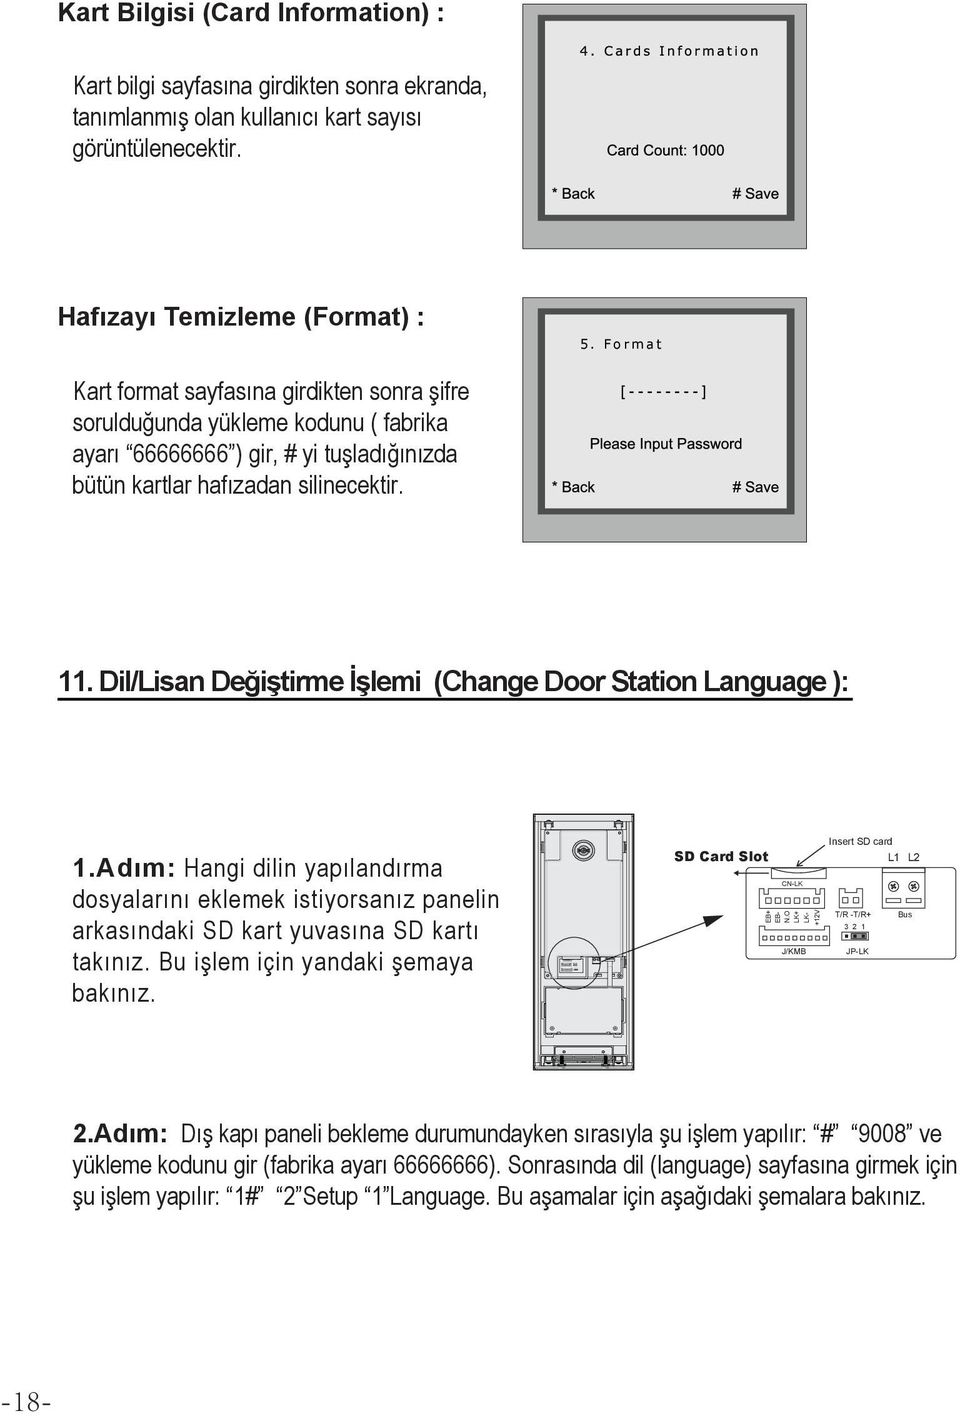 . Dil/Lisan Değiştirme İşlemi (Change Door Station Language ): Insert SD card SD Card Slot L L J/KMB +V CN-LK EB+ EBN.O LK+ LK-.